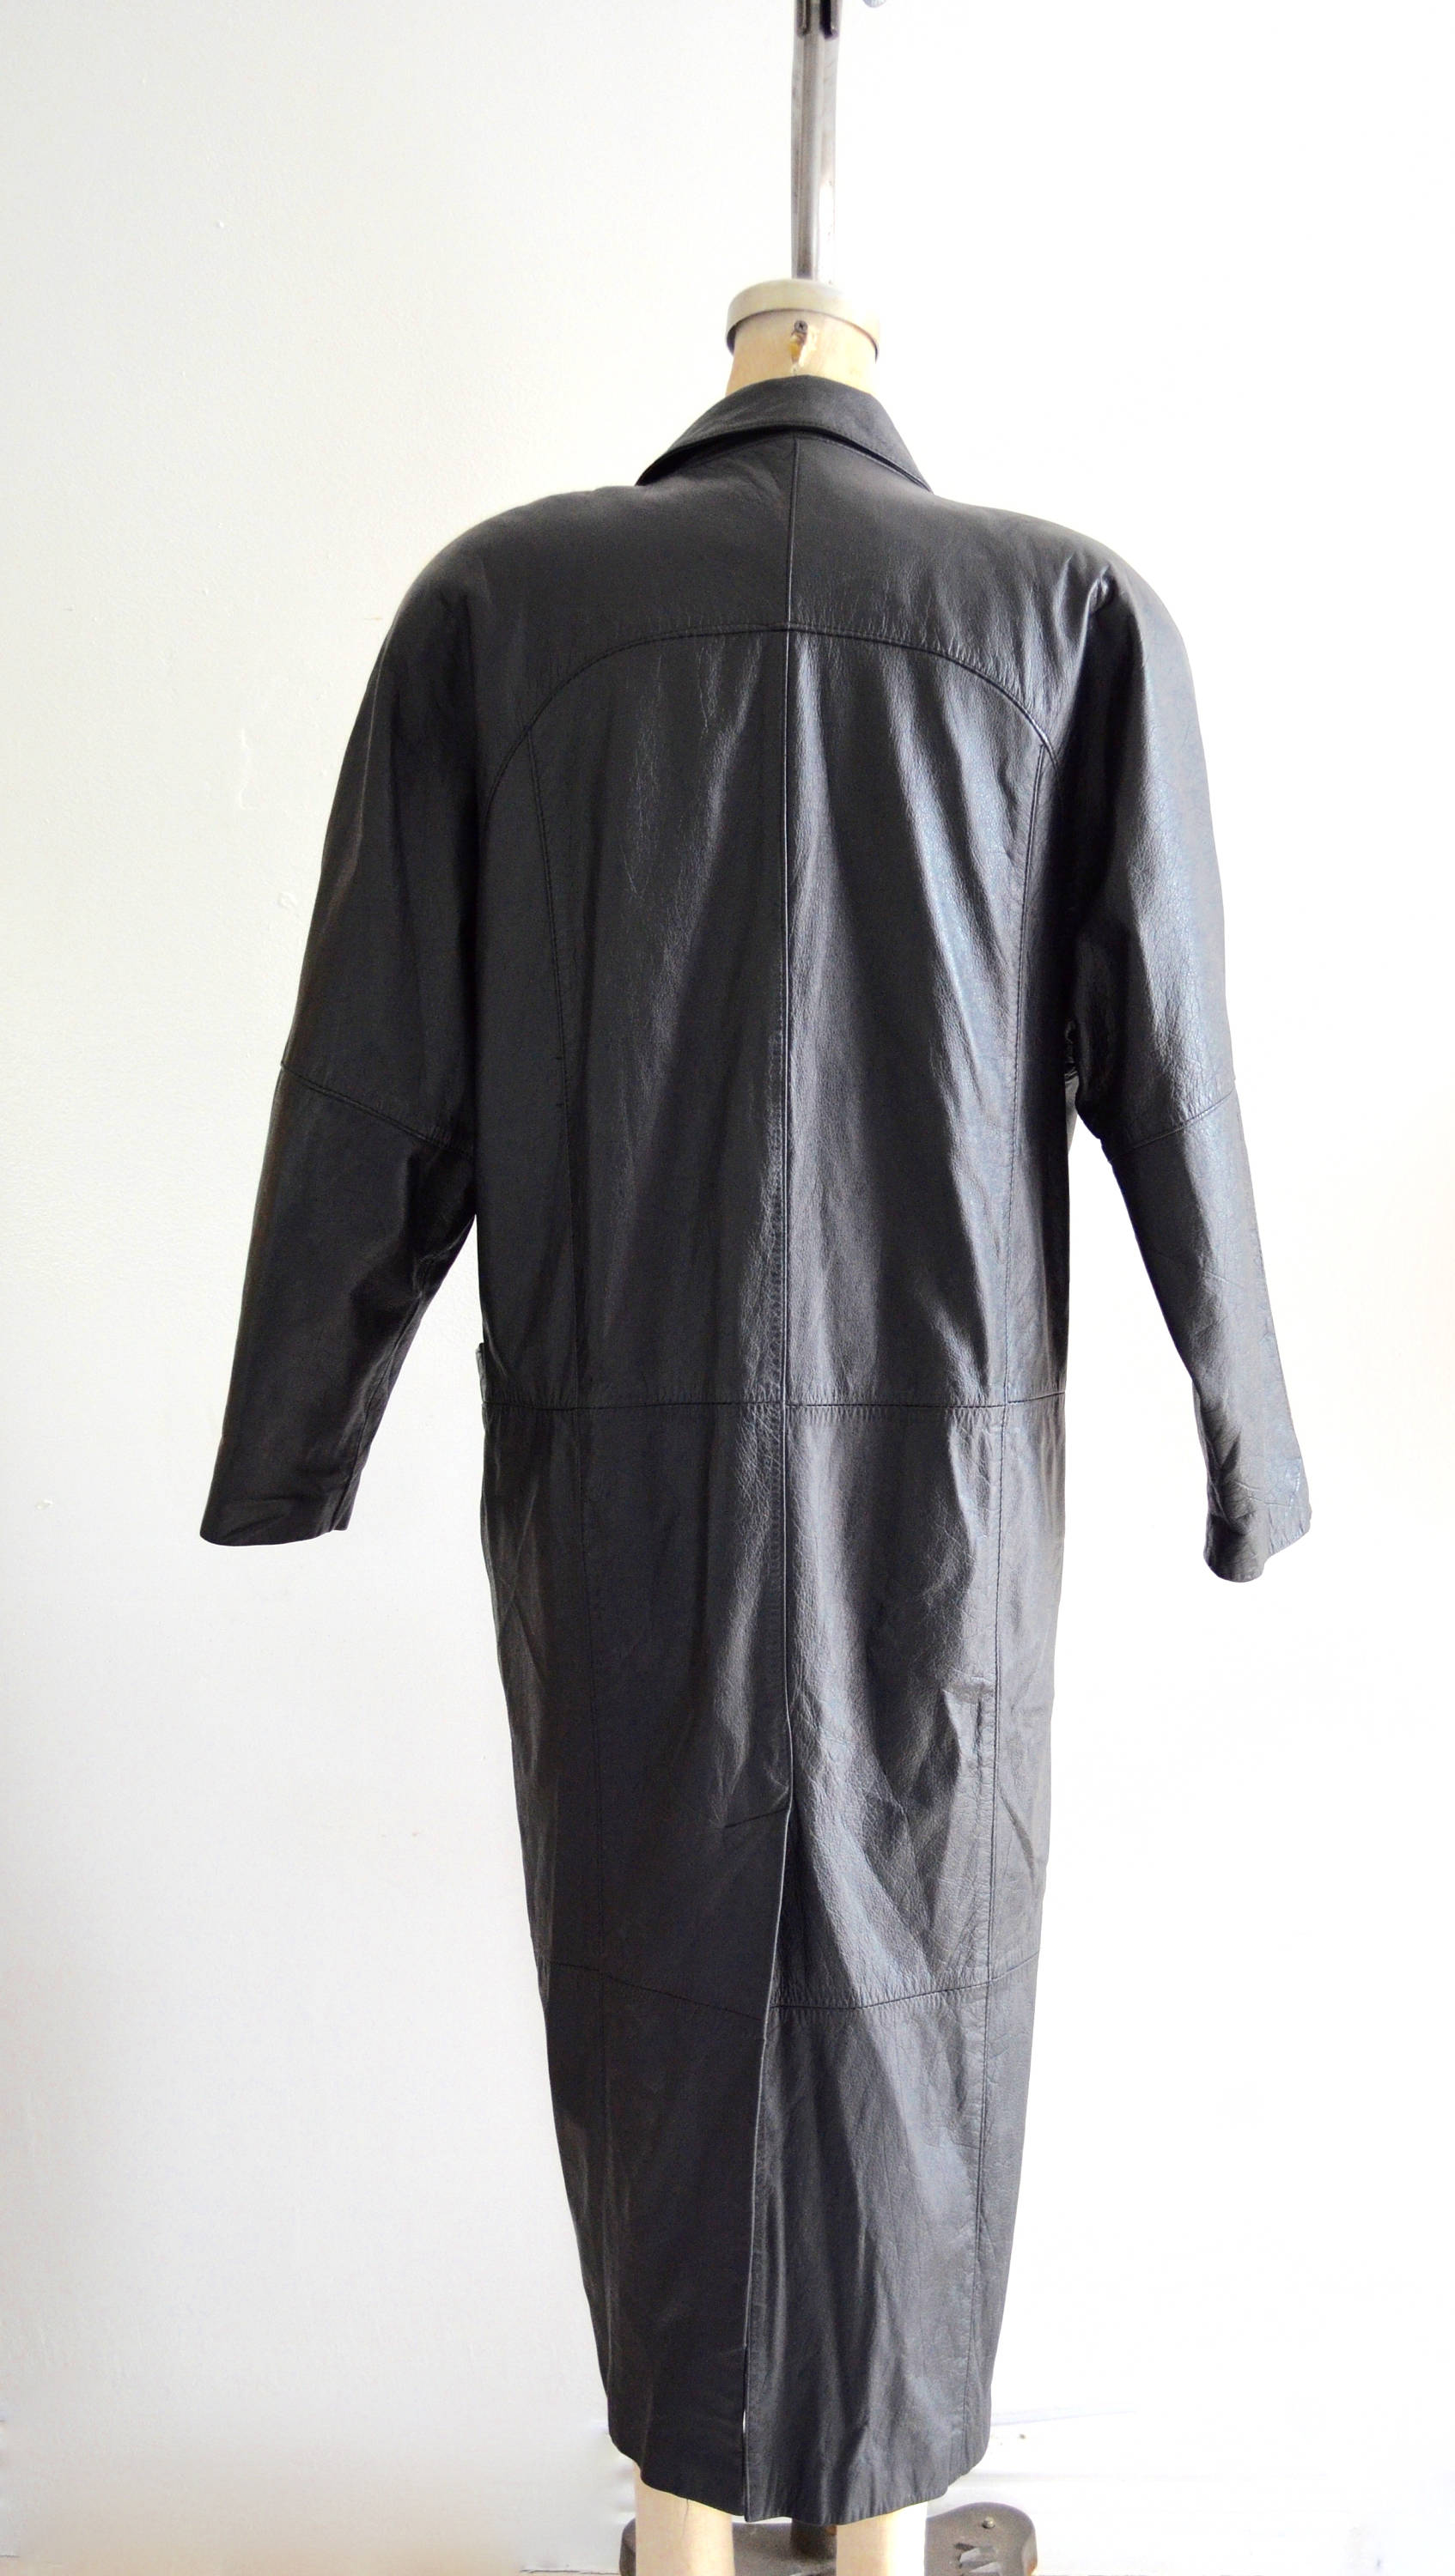 Black Leather Long Coat Outwear Trench Coat Jacket Raincoat 1980S Style Fall